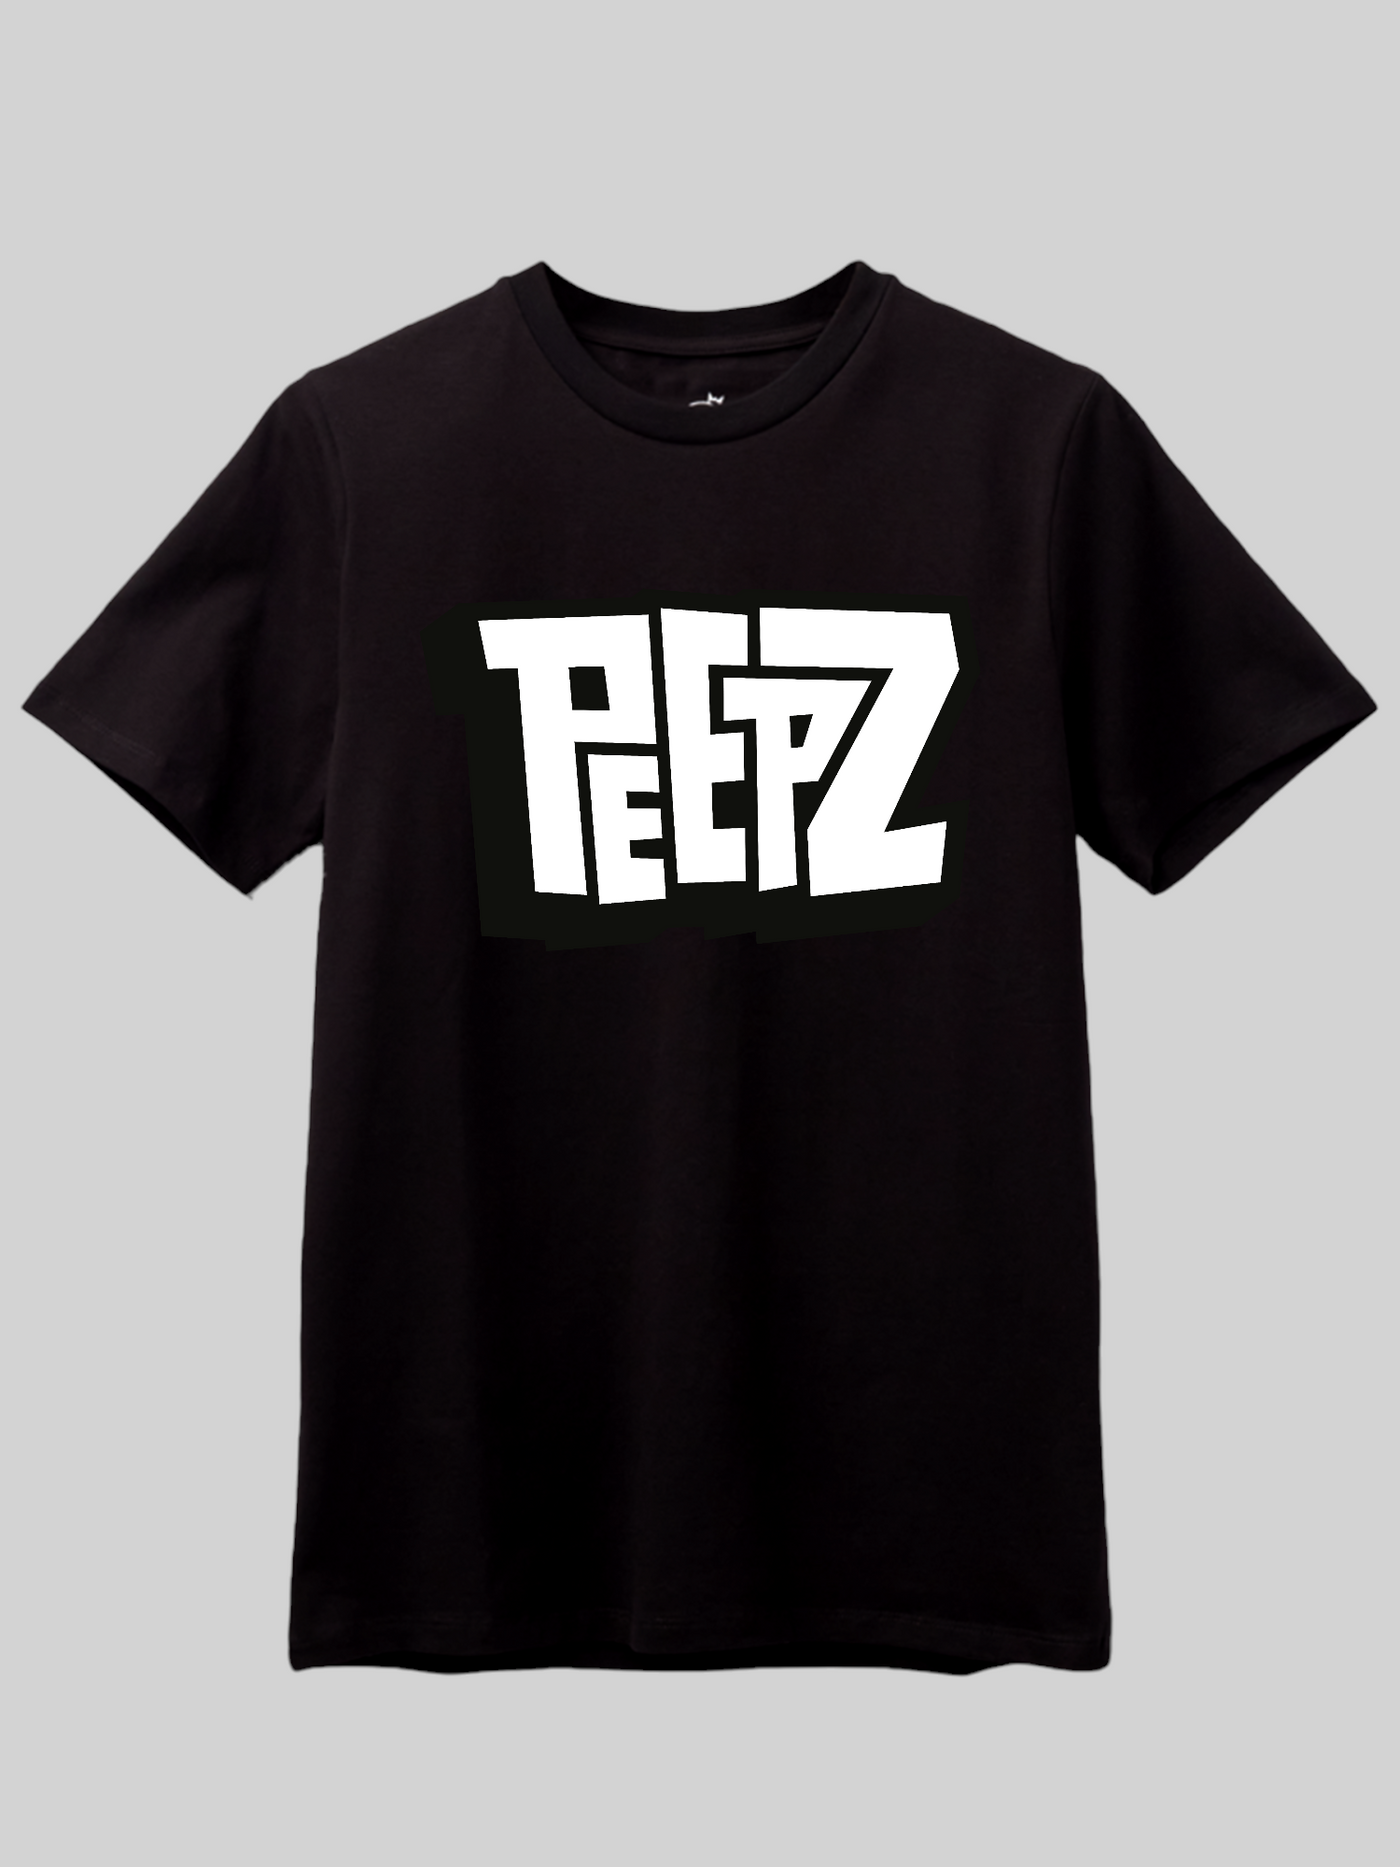 PEEPZ - t-shirt sort